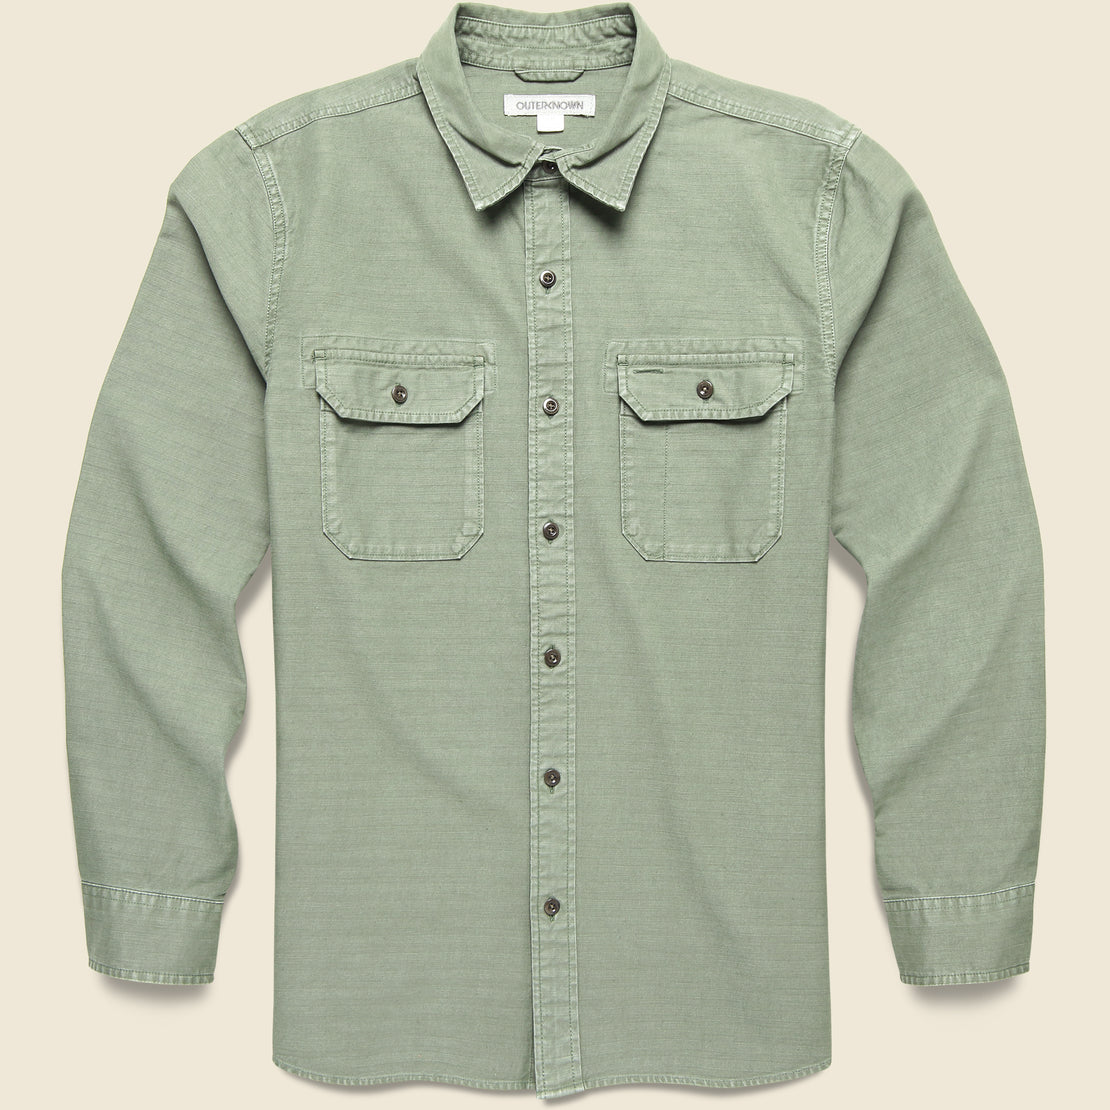 Utilitarian Shirt - Olive Drab